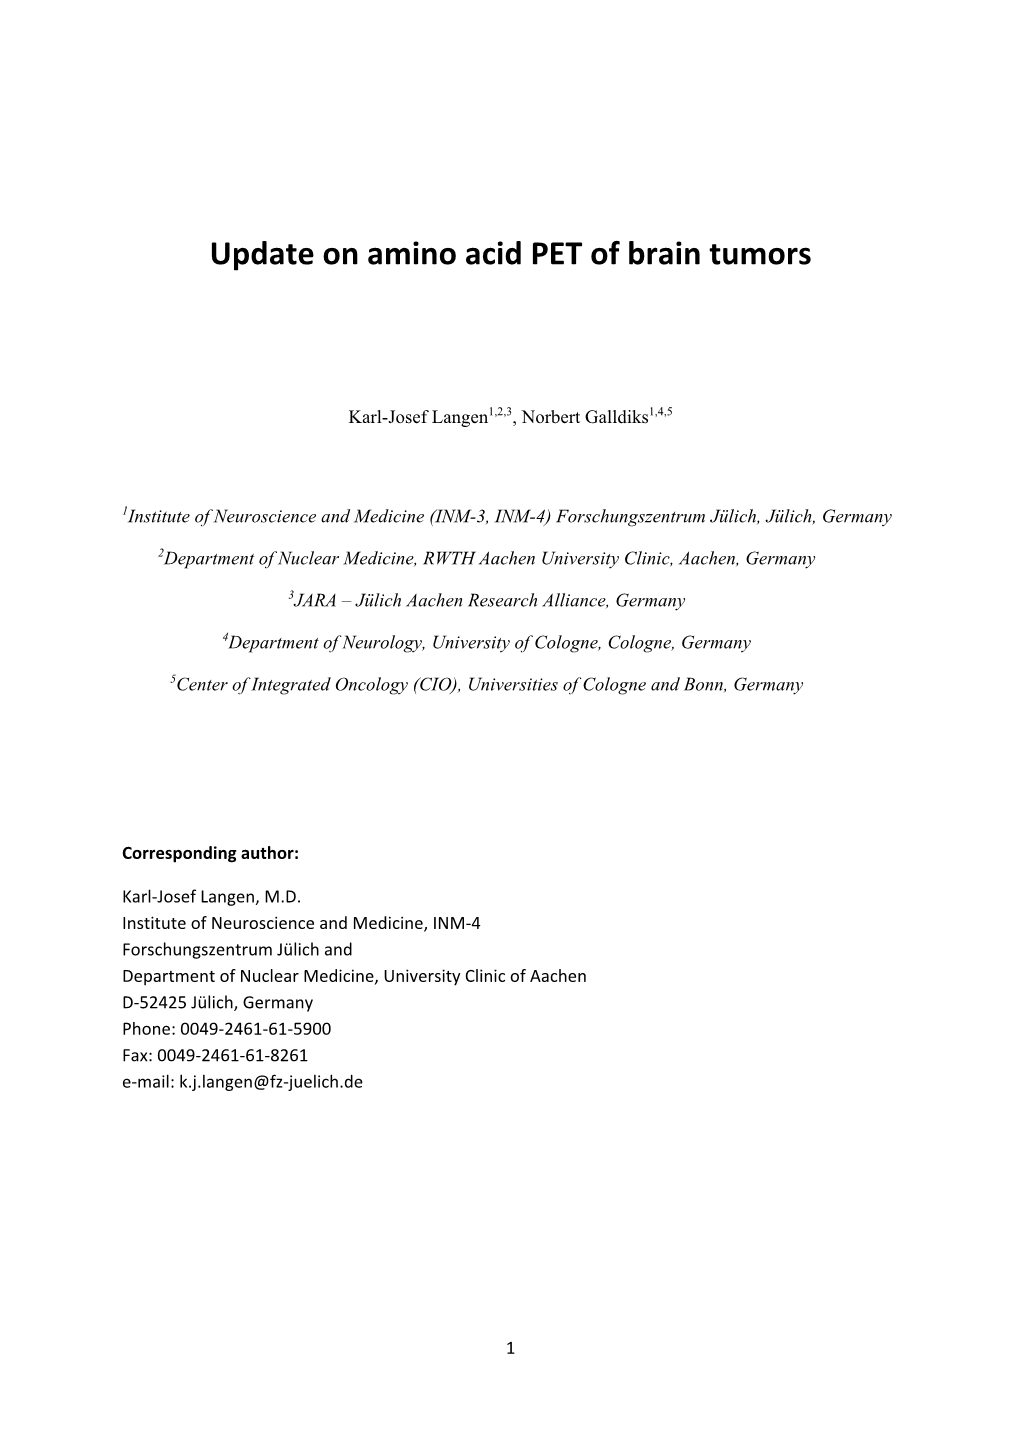 Update on Amino Acid PET of Brain Tumors